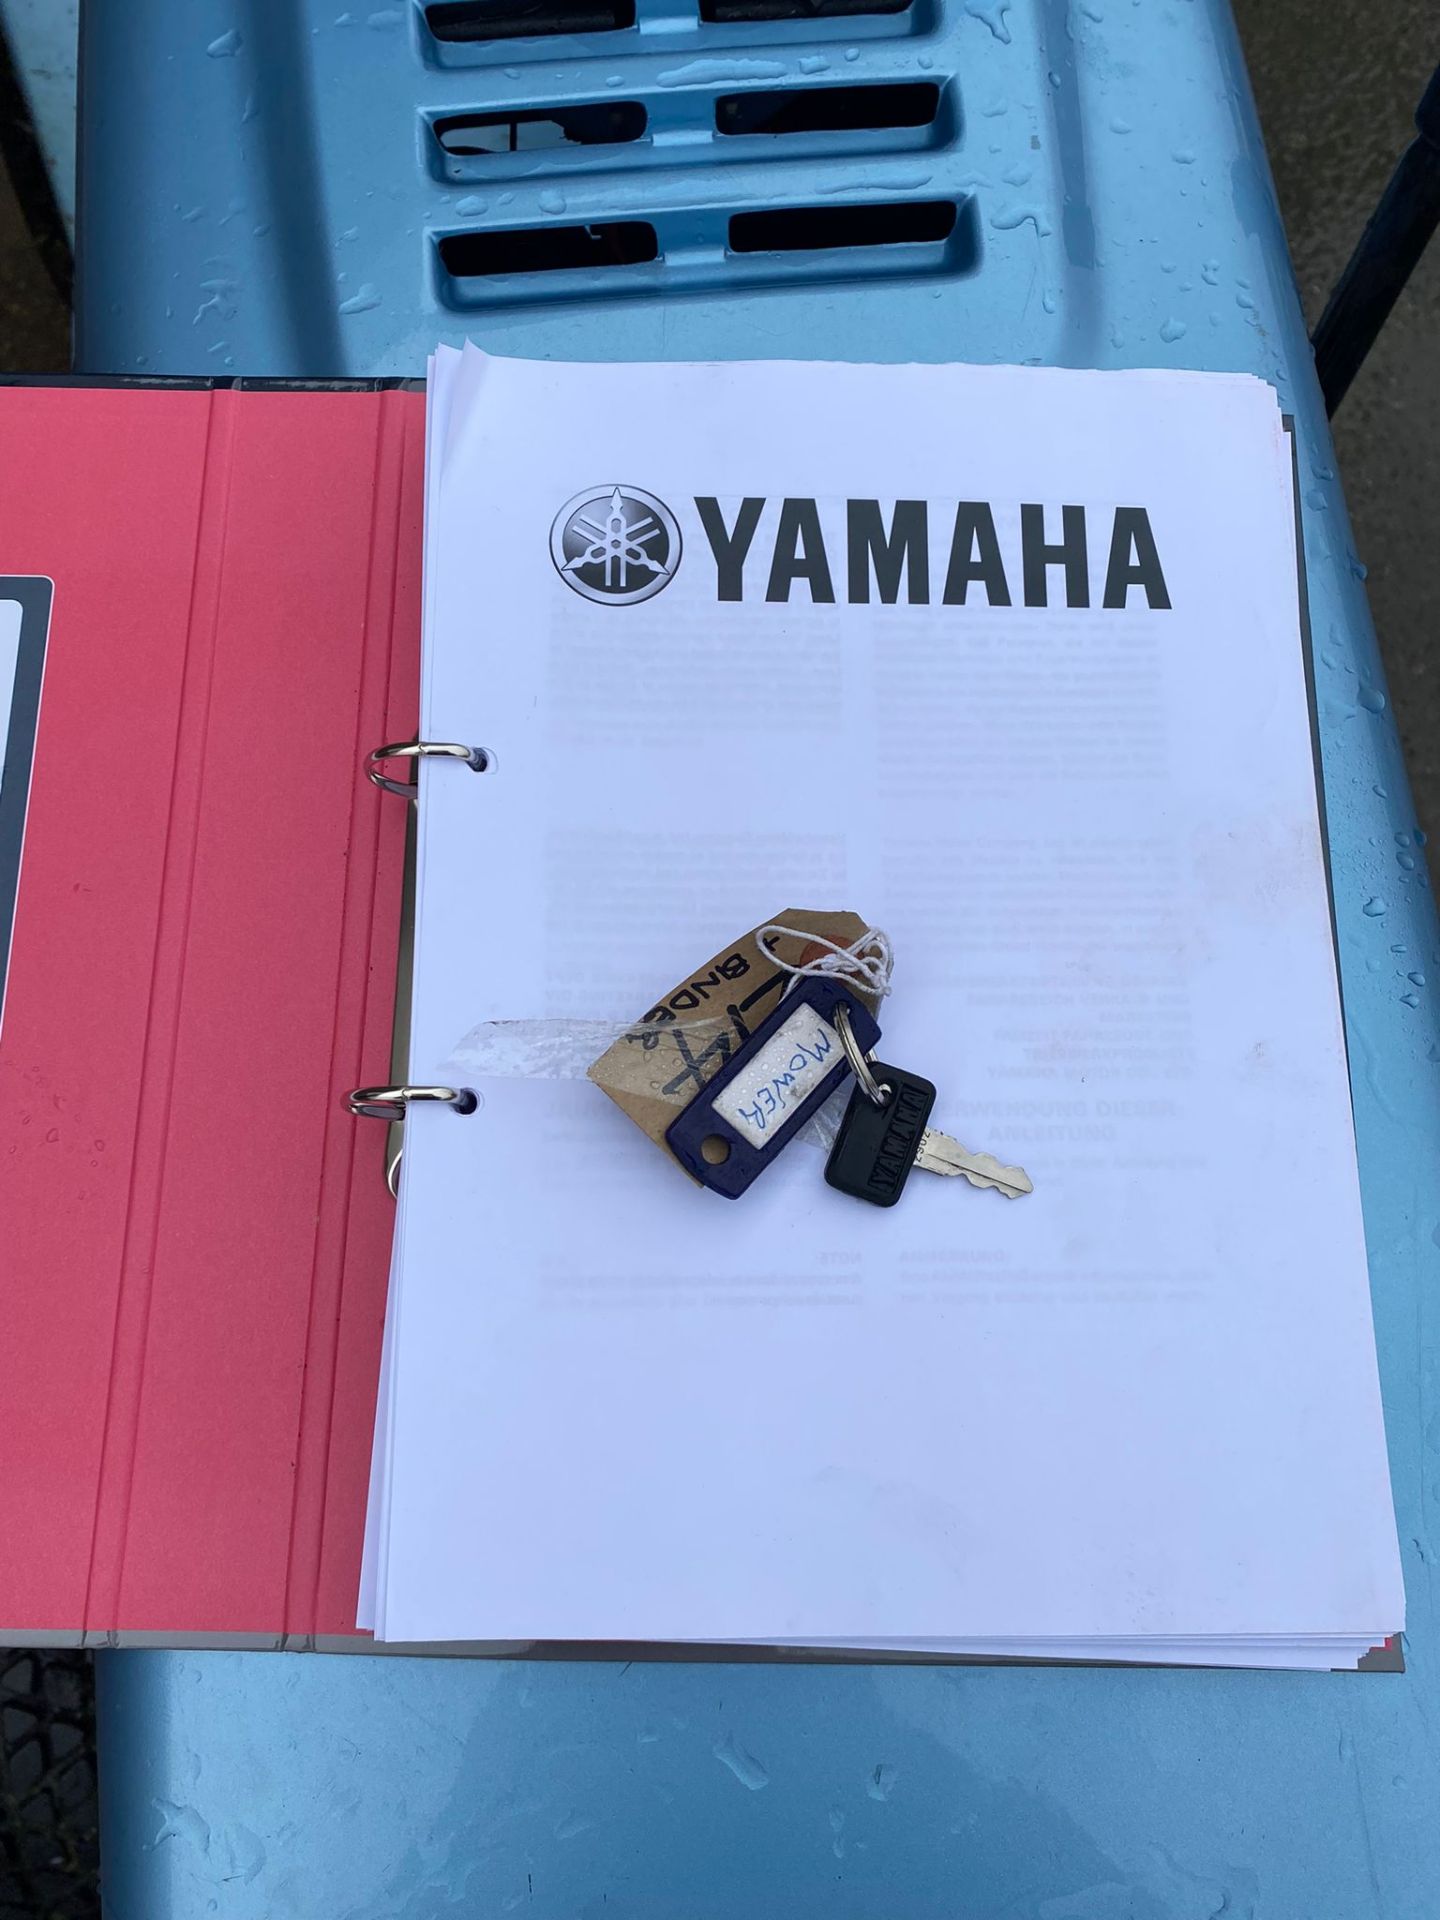 YAMAHA YT3600 RIDE ON MOWER VINTAGE WITH KEYS AND MANUAL - Bild 5 aus 5